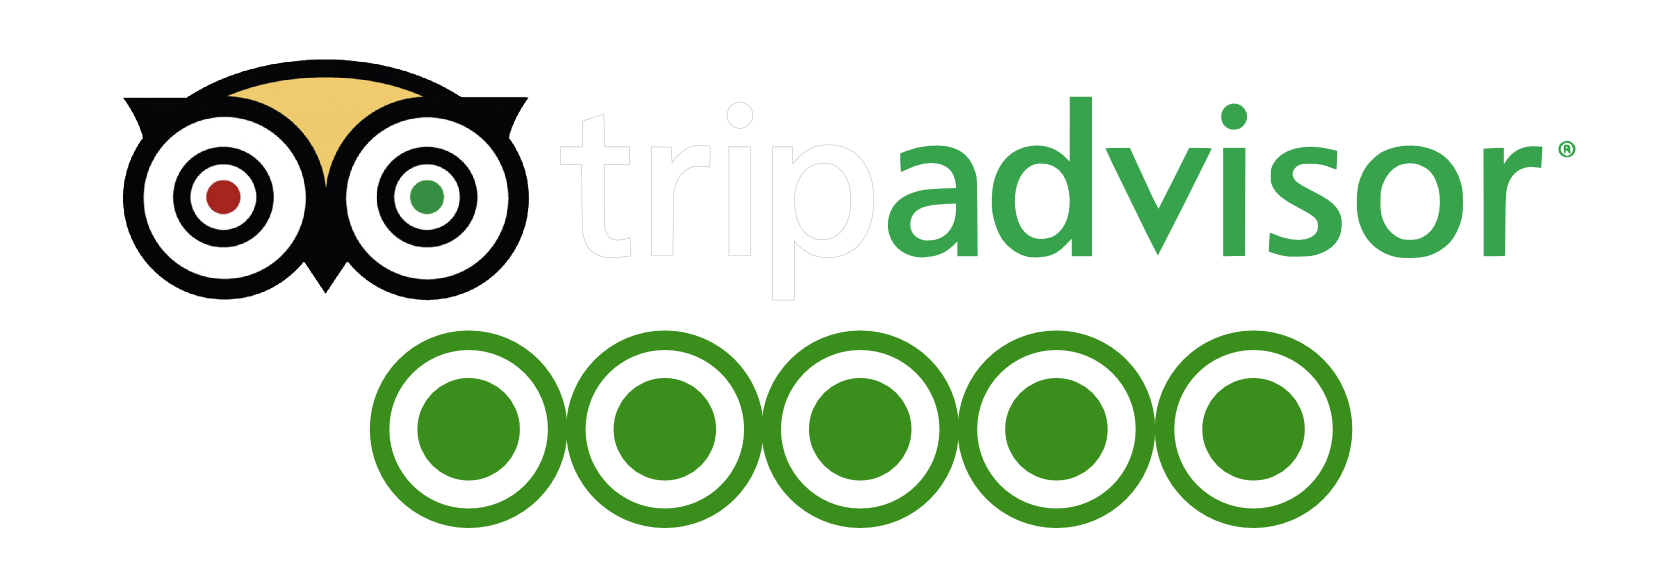 Advisor Logo - trip advisor logo inari